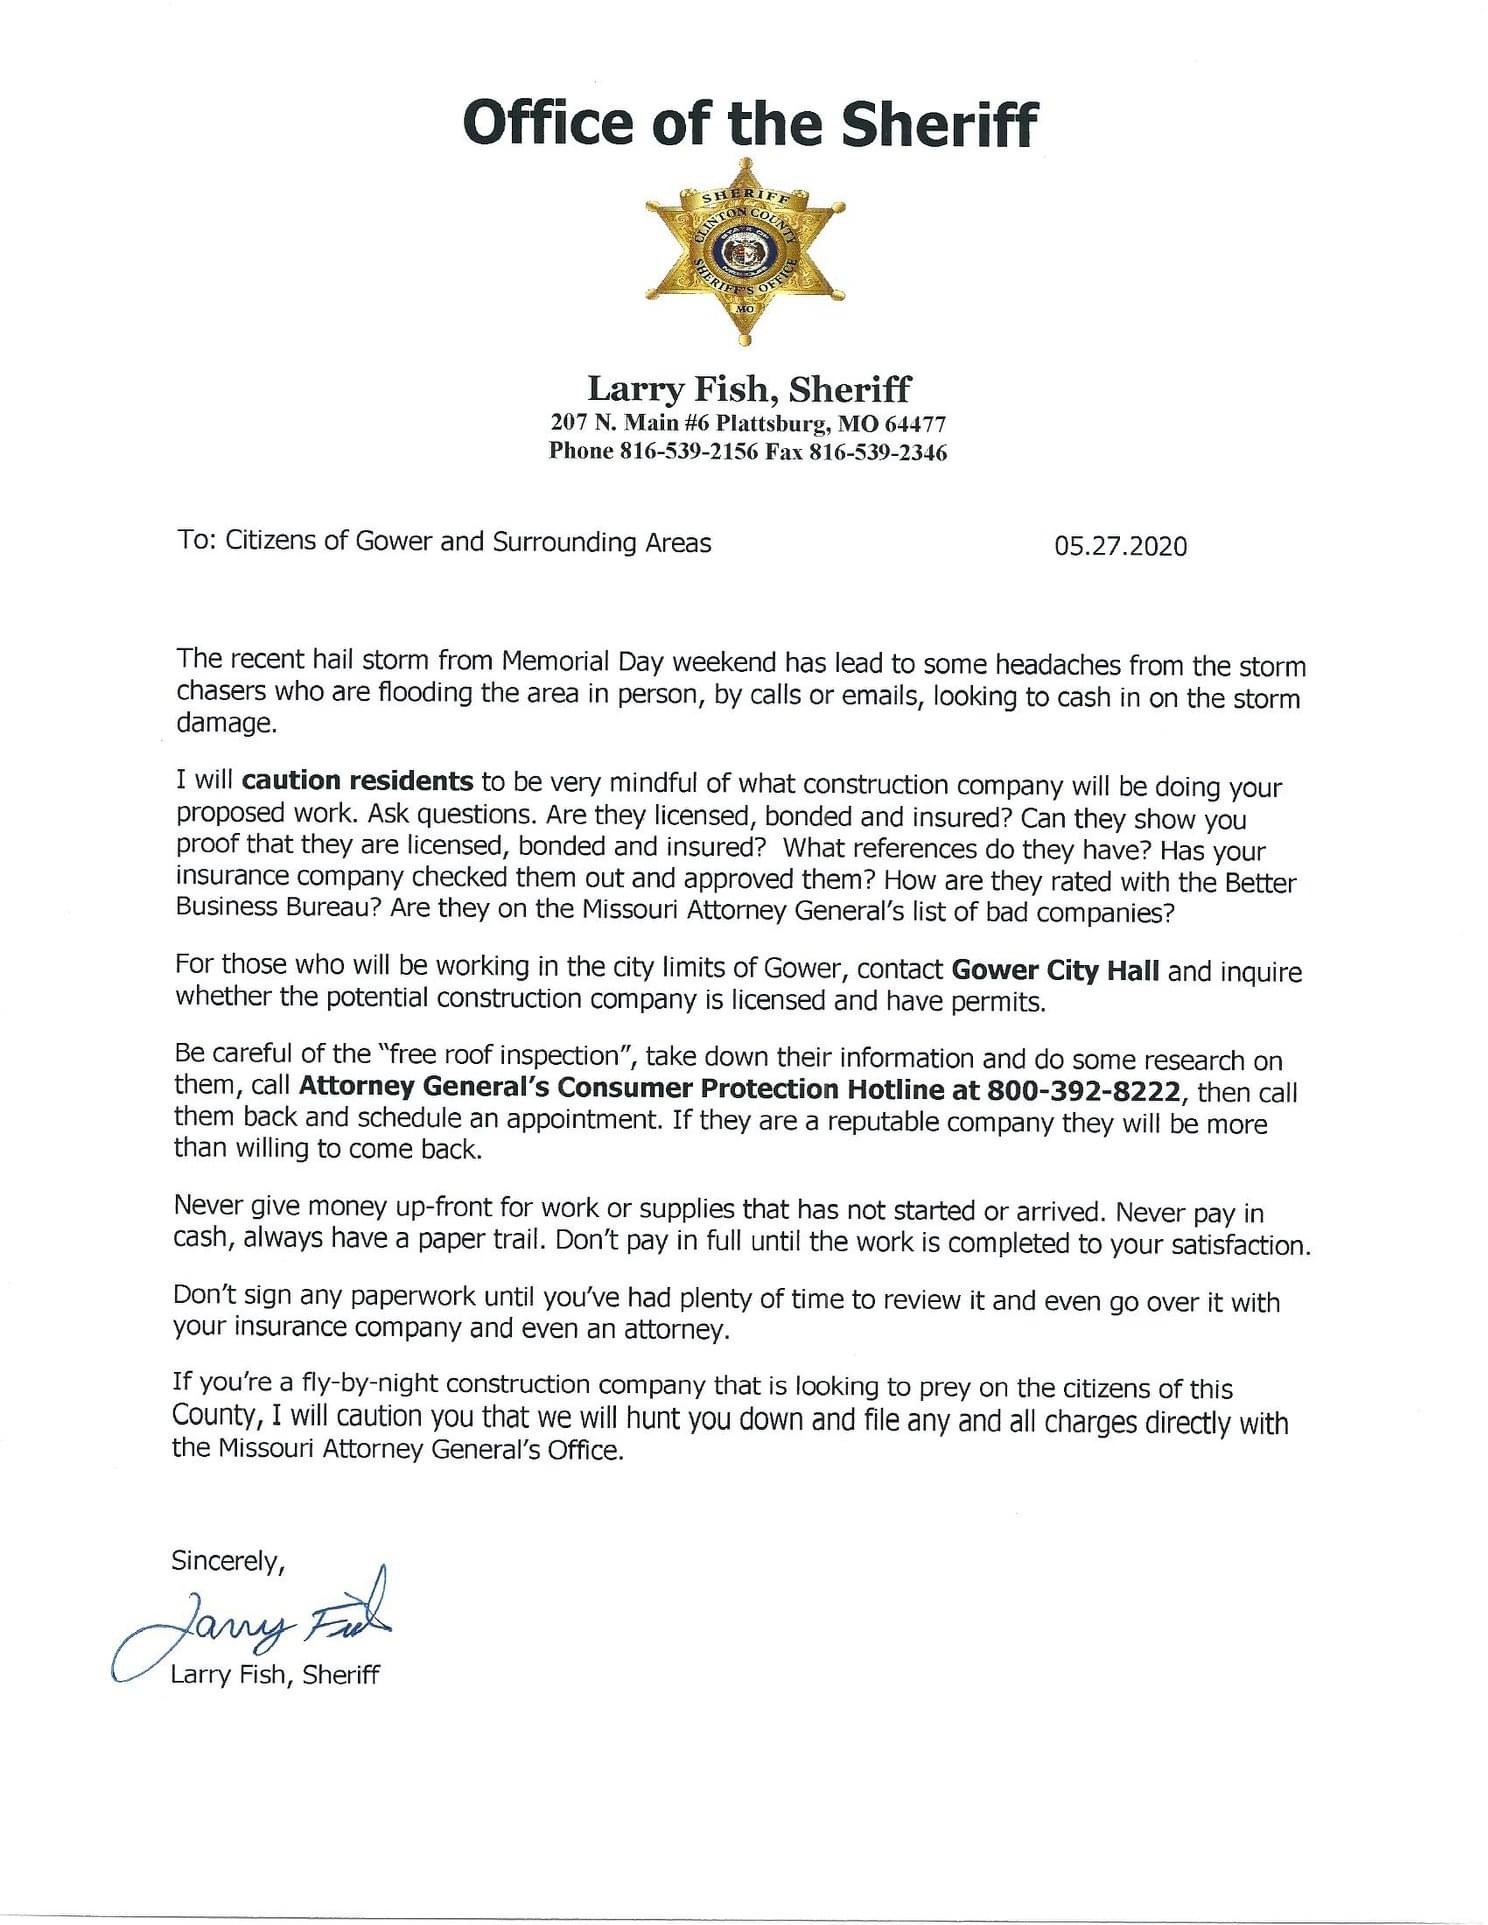 Sheriff Larry Fish Letter 6-2020